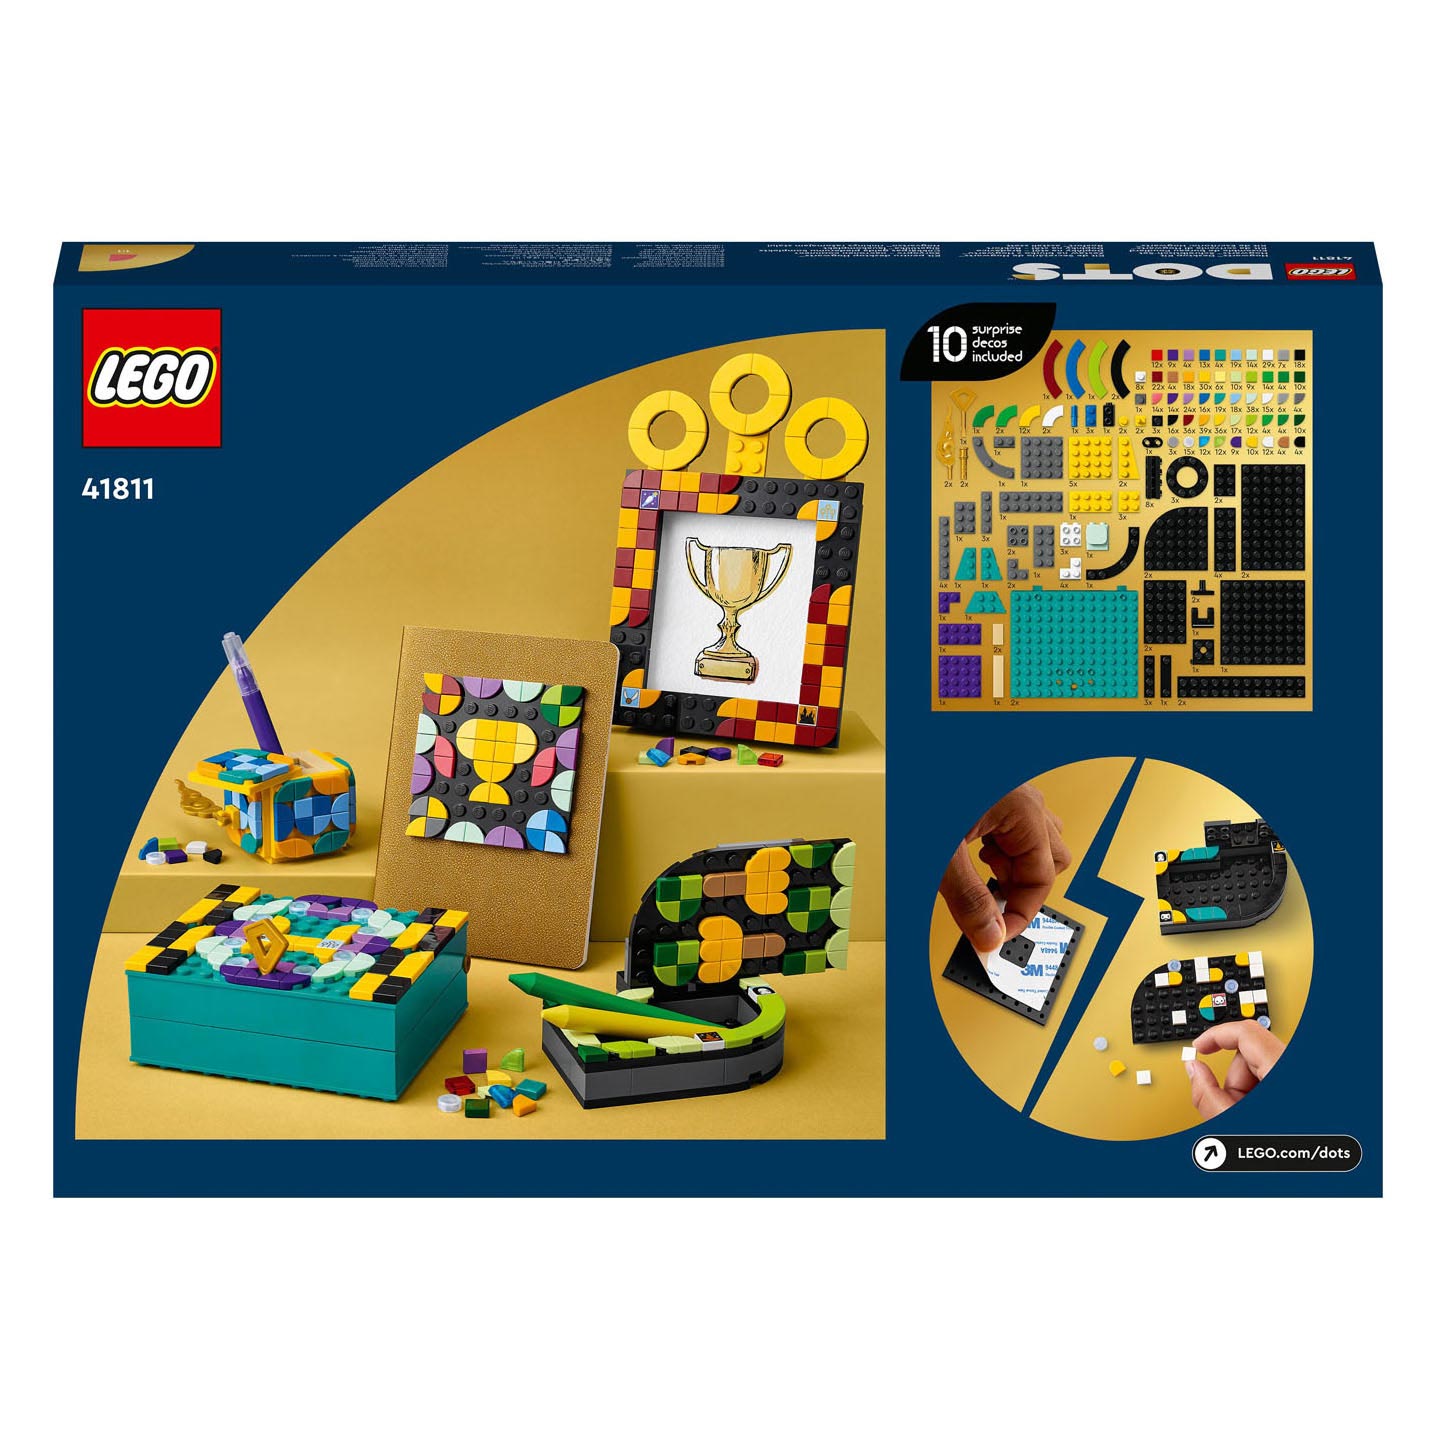 LEGO DOTS 41811 Harry Potter Zweinstein Bureaukit